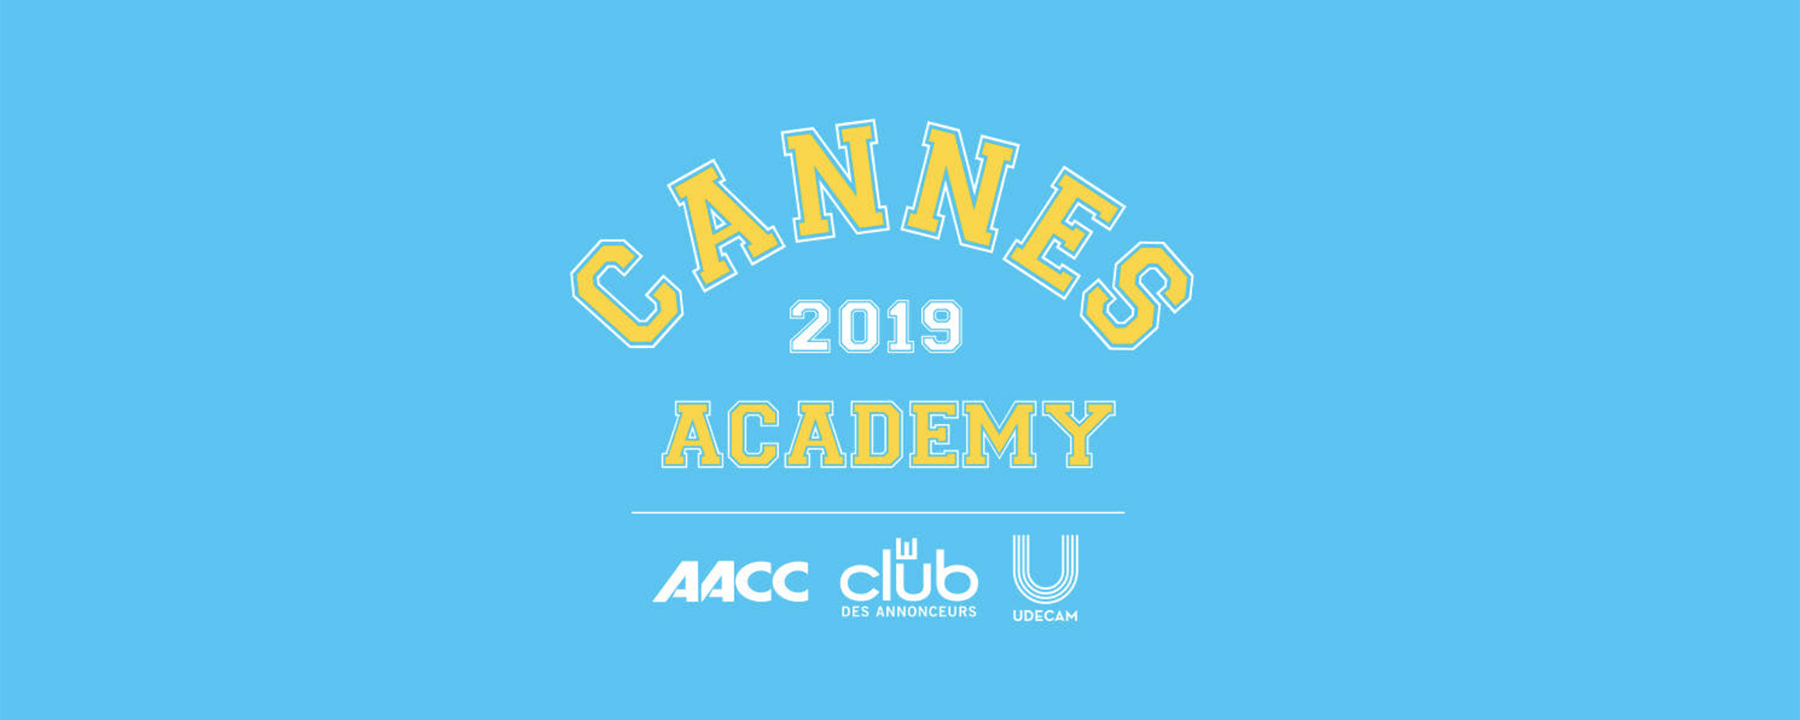 Cannes Academy 4